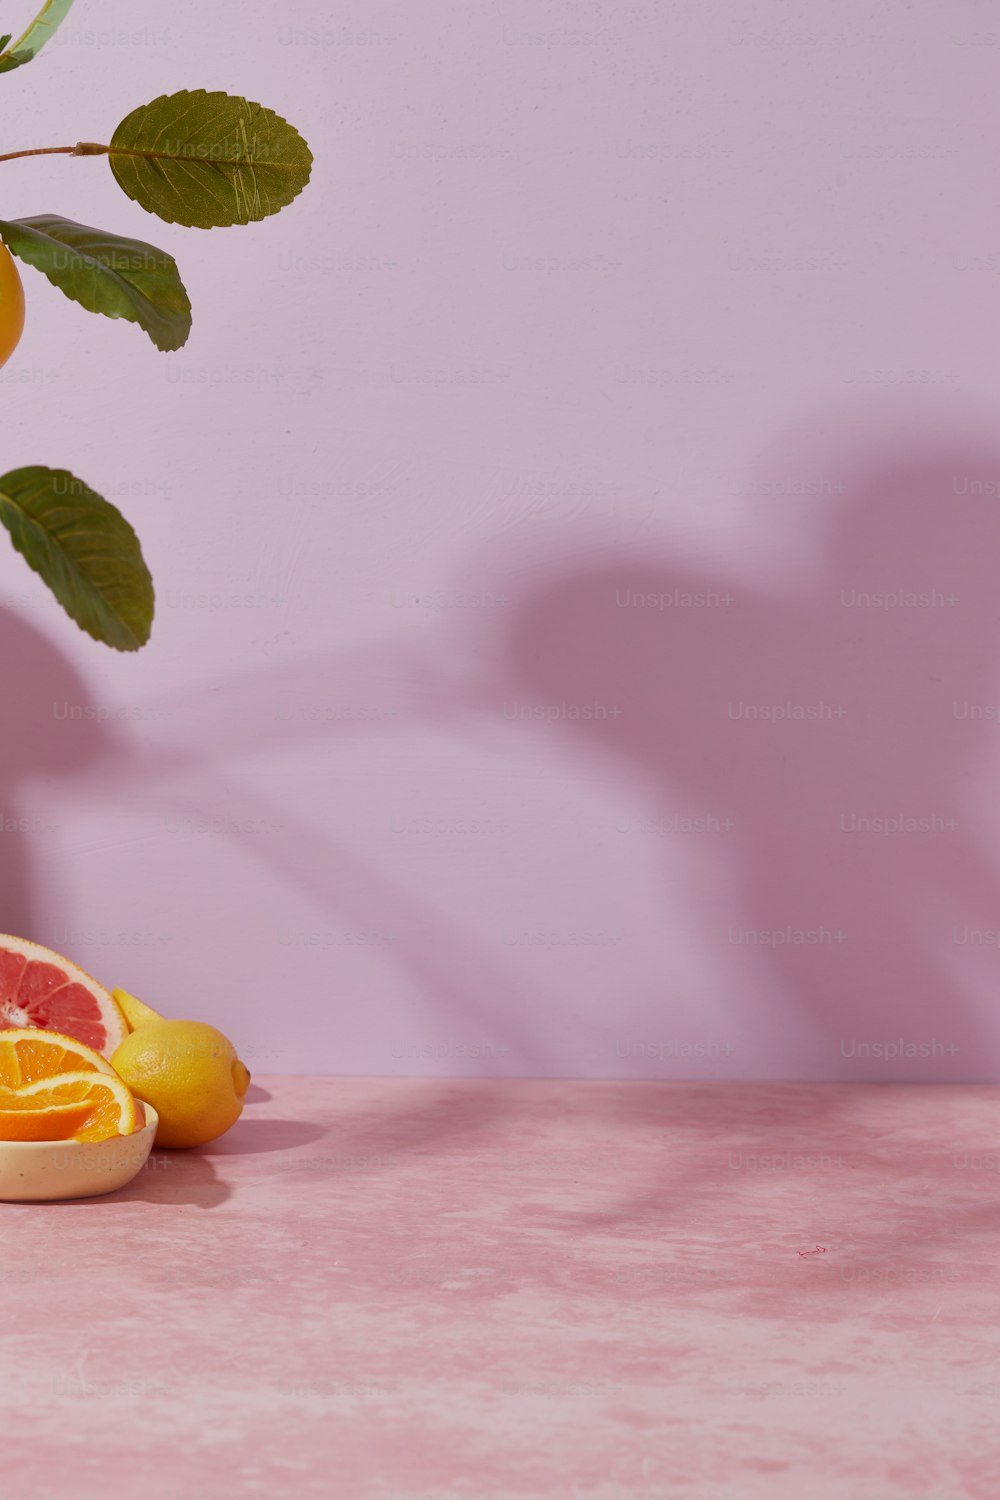 a grapefruit cut in half next to a grapefruit